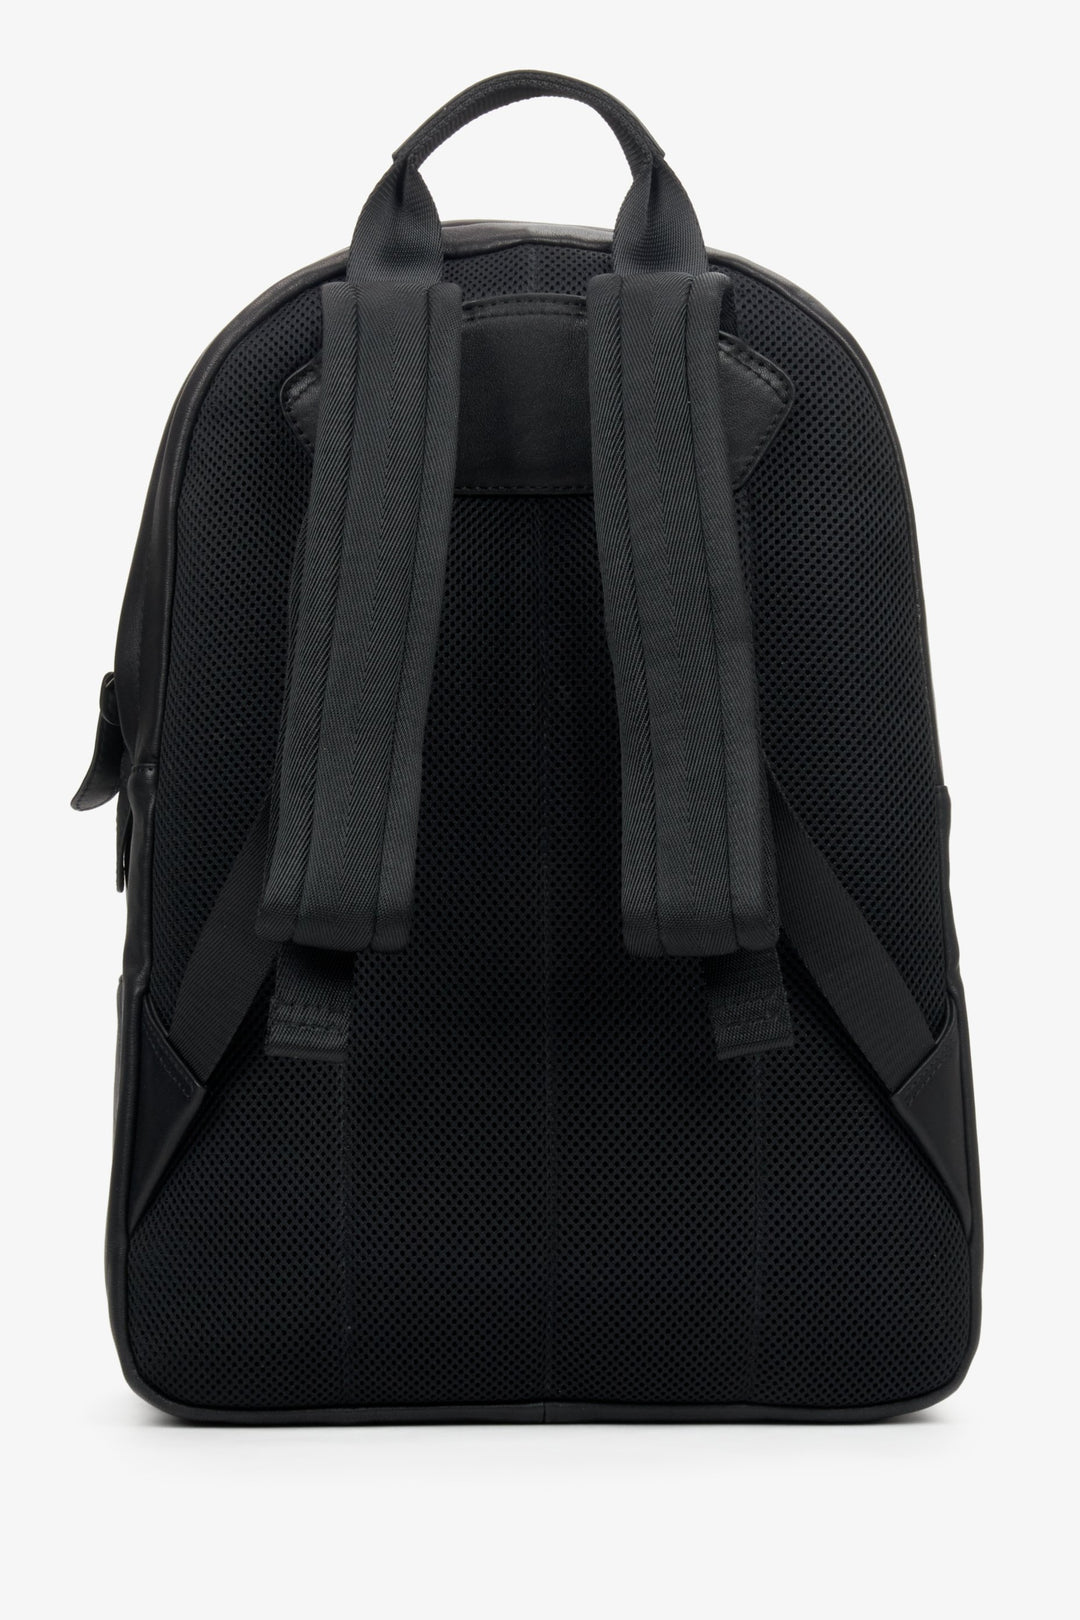 Men's large black backpack made of genuine leather by Estro - close-up on the shoulder straps.